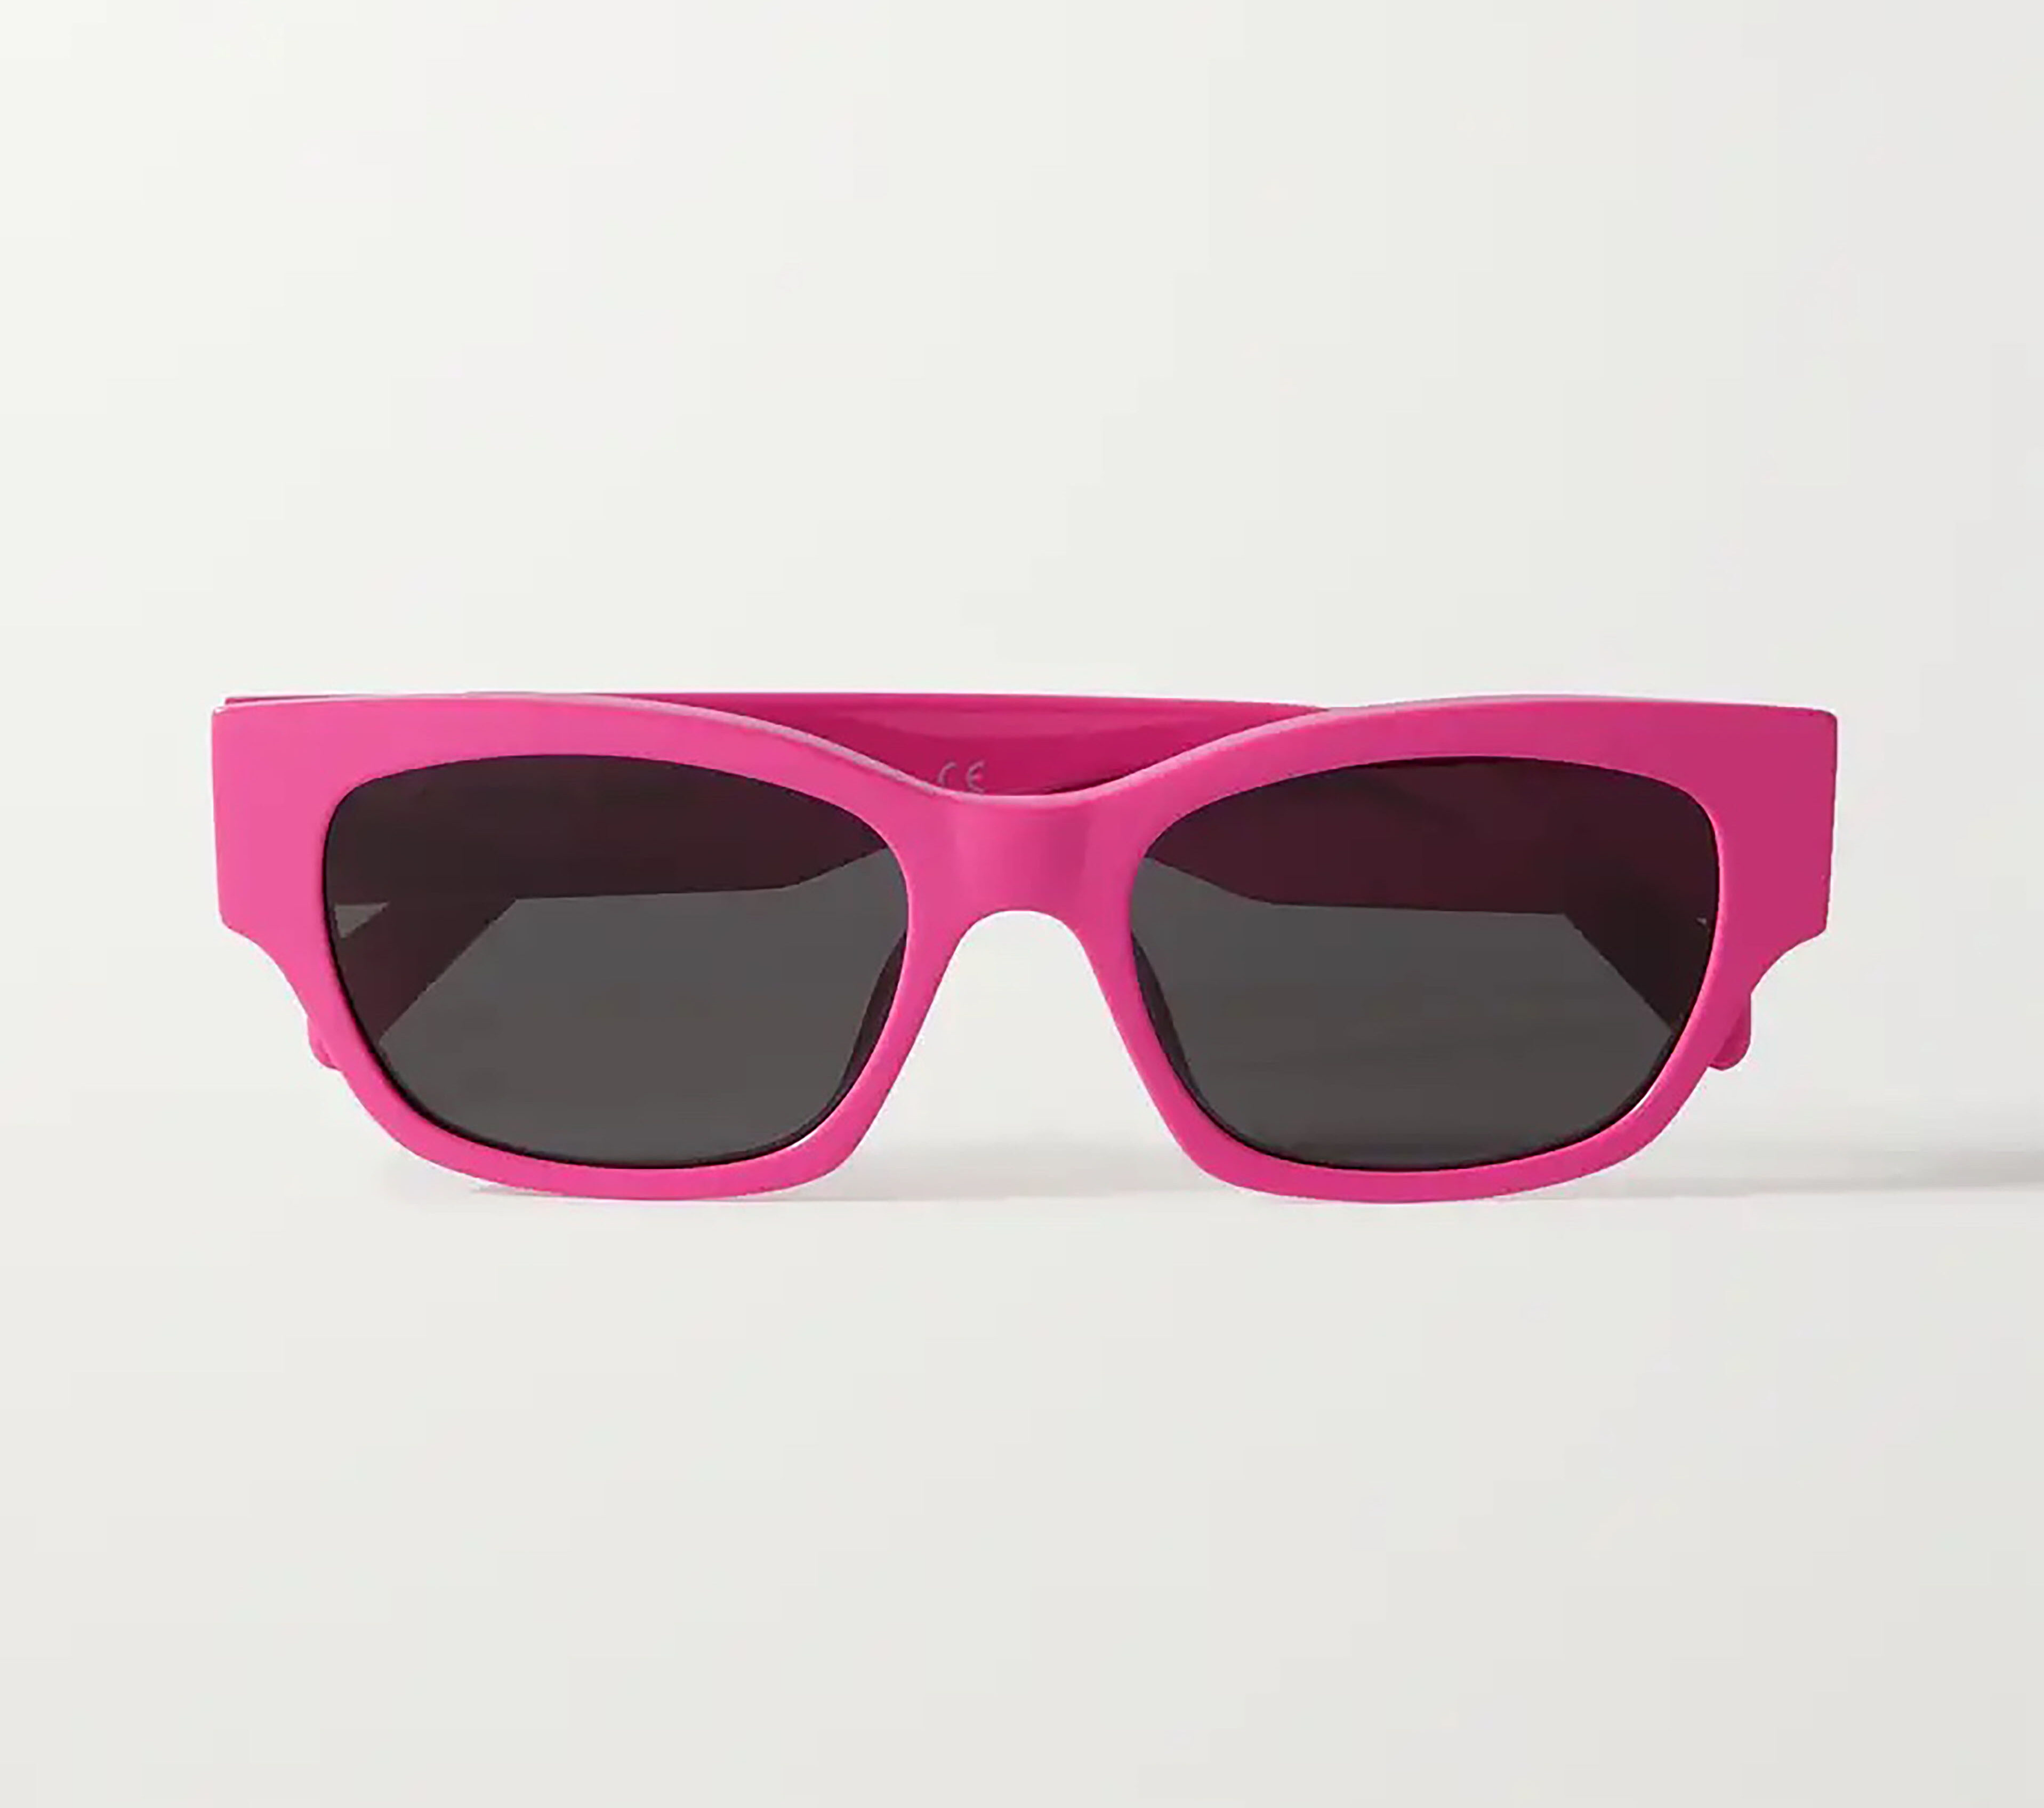 Celine Monocroms sunglasses in flash pink